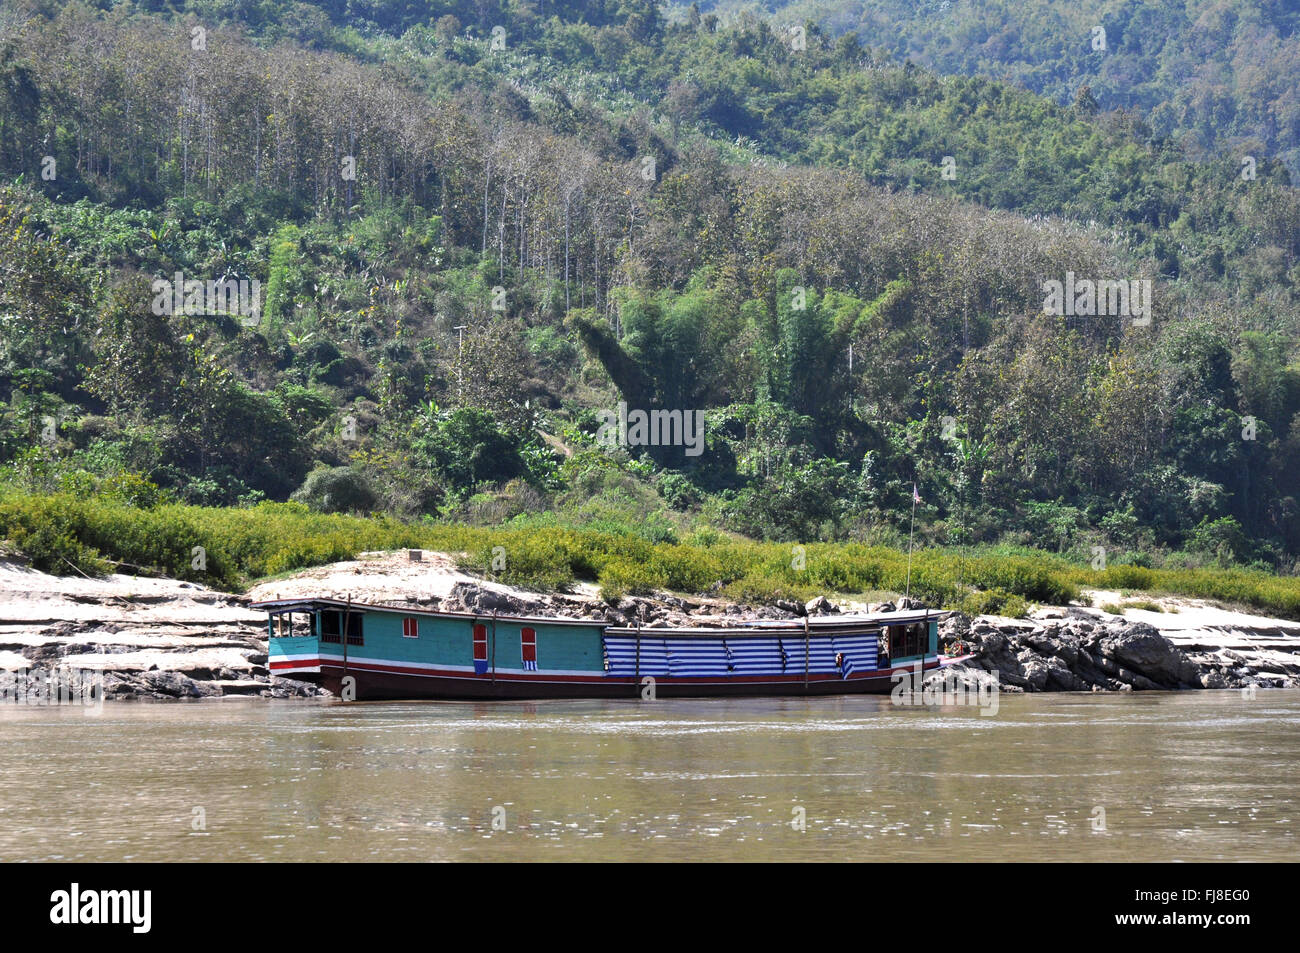 Slowboat, Mekong river, Laos Stock Photo - Alamy